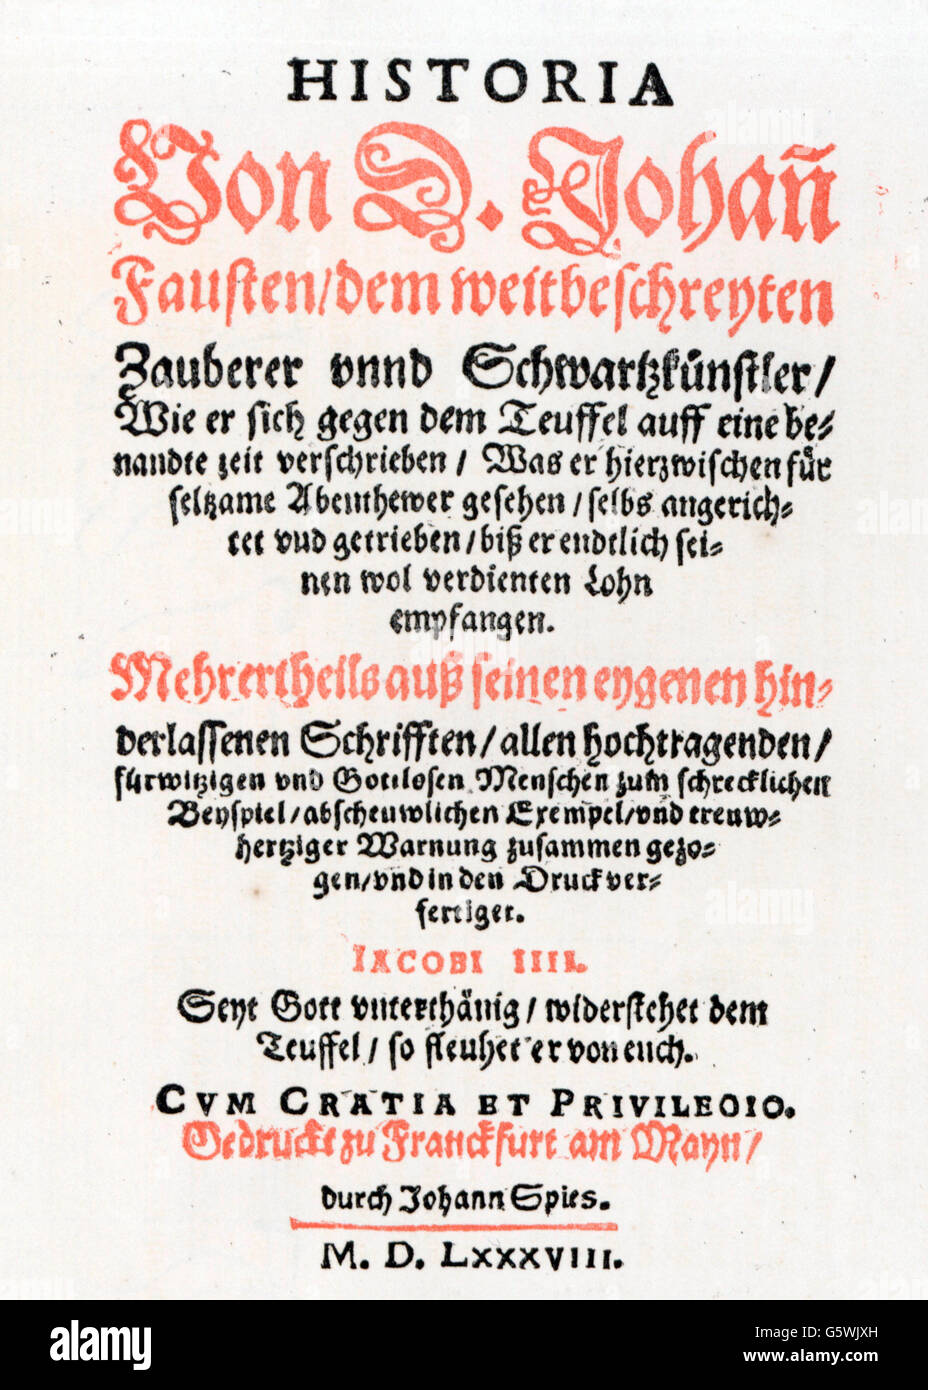 Faust, Johannes, circa 1480 - circa 1540, German magician and astrologer, 'Historia von D. Johann Fausten' (Story of Doctor Johannes Faust), 2nd edition, title page, print: Johann Spies (circa 1540 - 1623), Frankfurt, 1588, Stock Photo